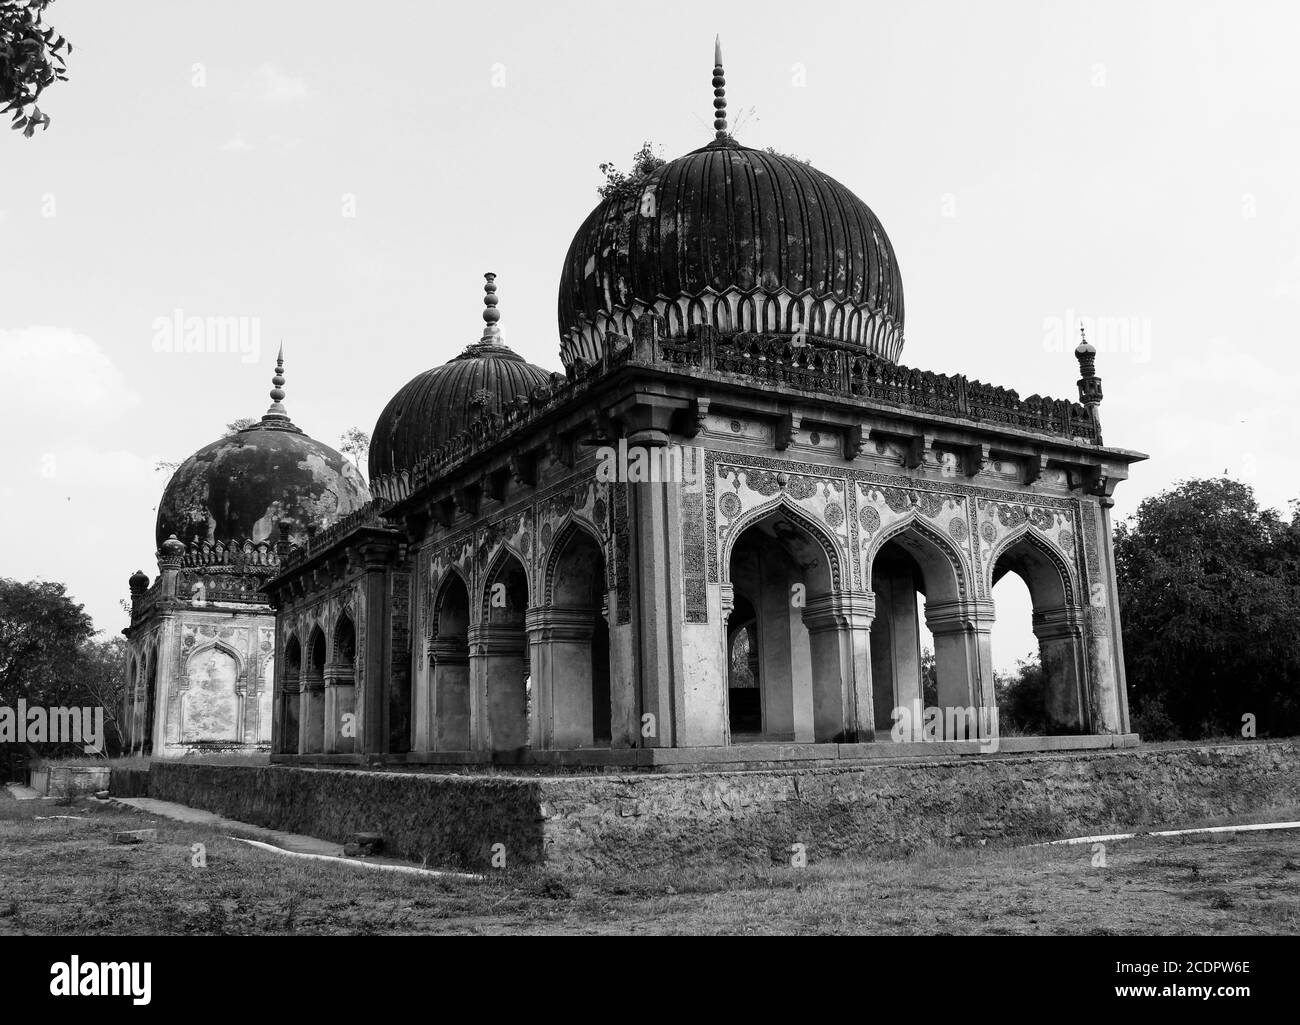 Historic Qutub Shahi tombs Stock Photo - Alamy